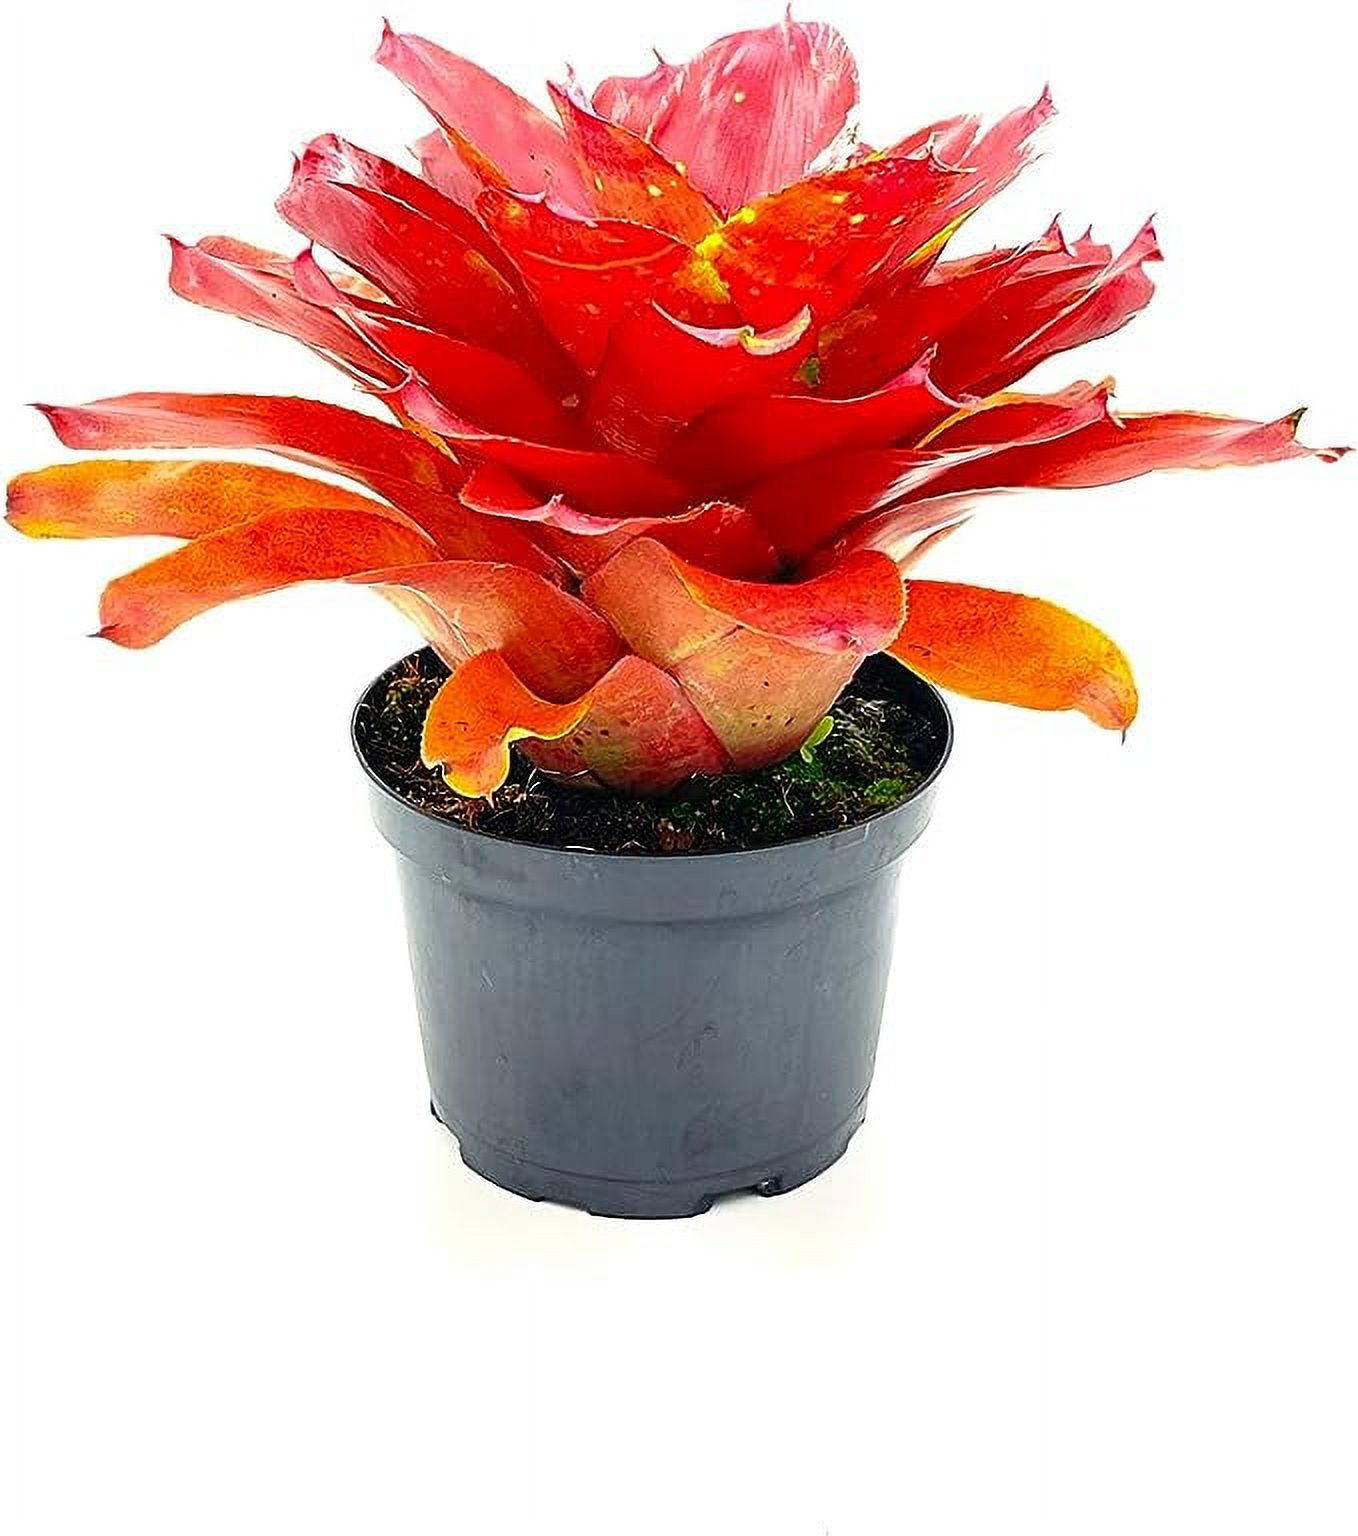 ragnaroc Live Plants – Bromeliad Neoregelia Lamberts Pride, 8-12" in 6" Pot - 1ct - Live Arrival Guaranteed - House Plants for Home Decor & Gift - image 3 of 5